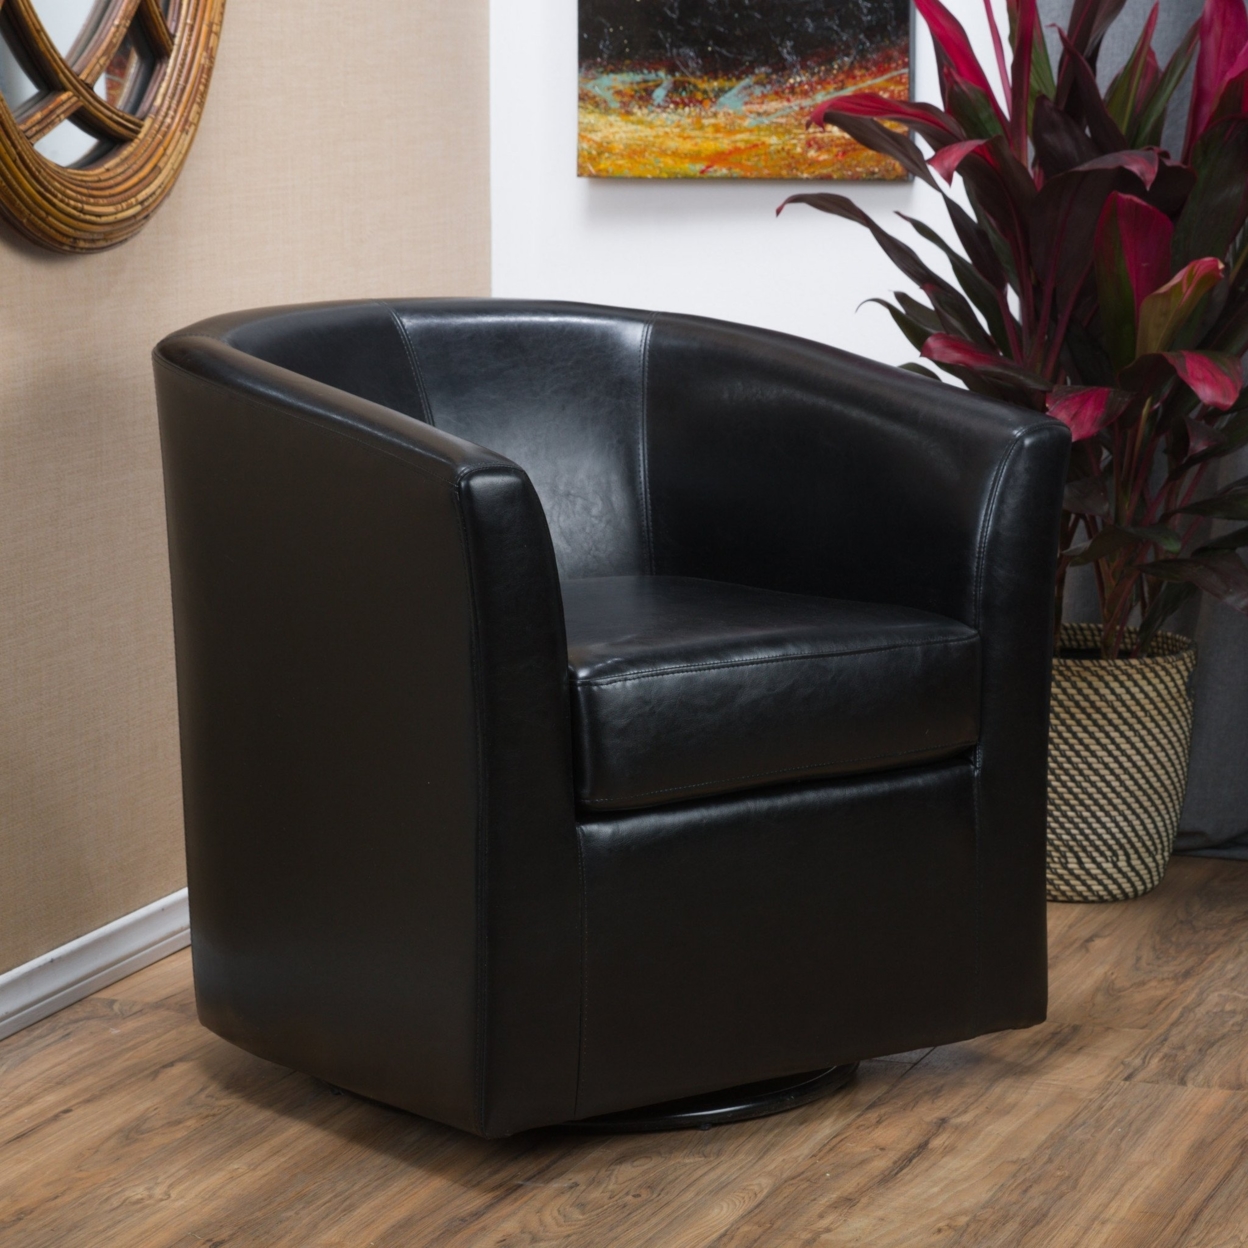 Corley Barrel Club Chair With Swivel Seat - Black